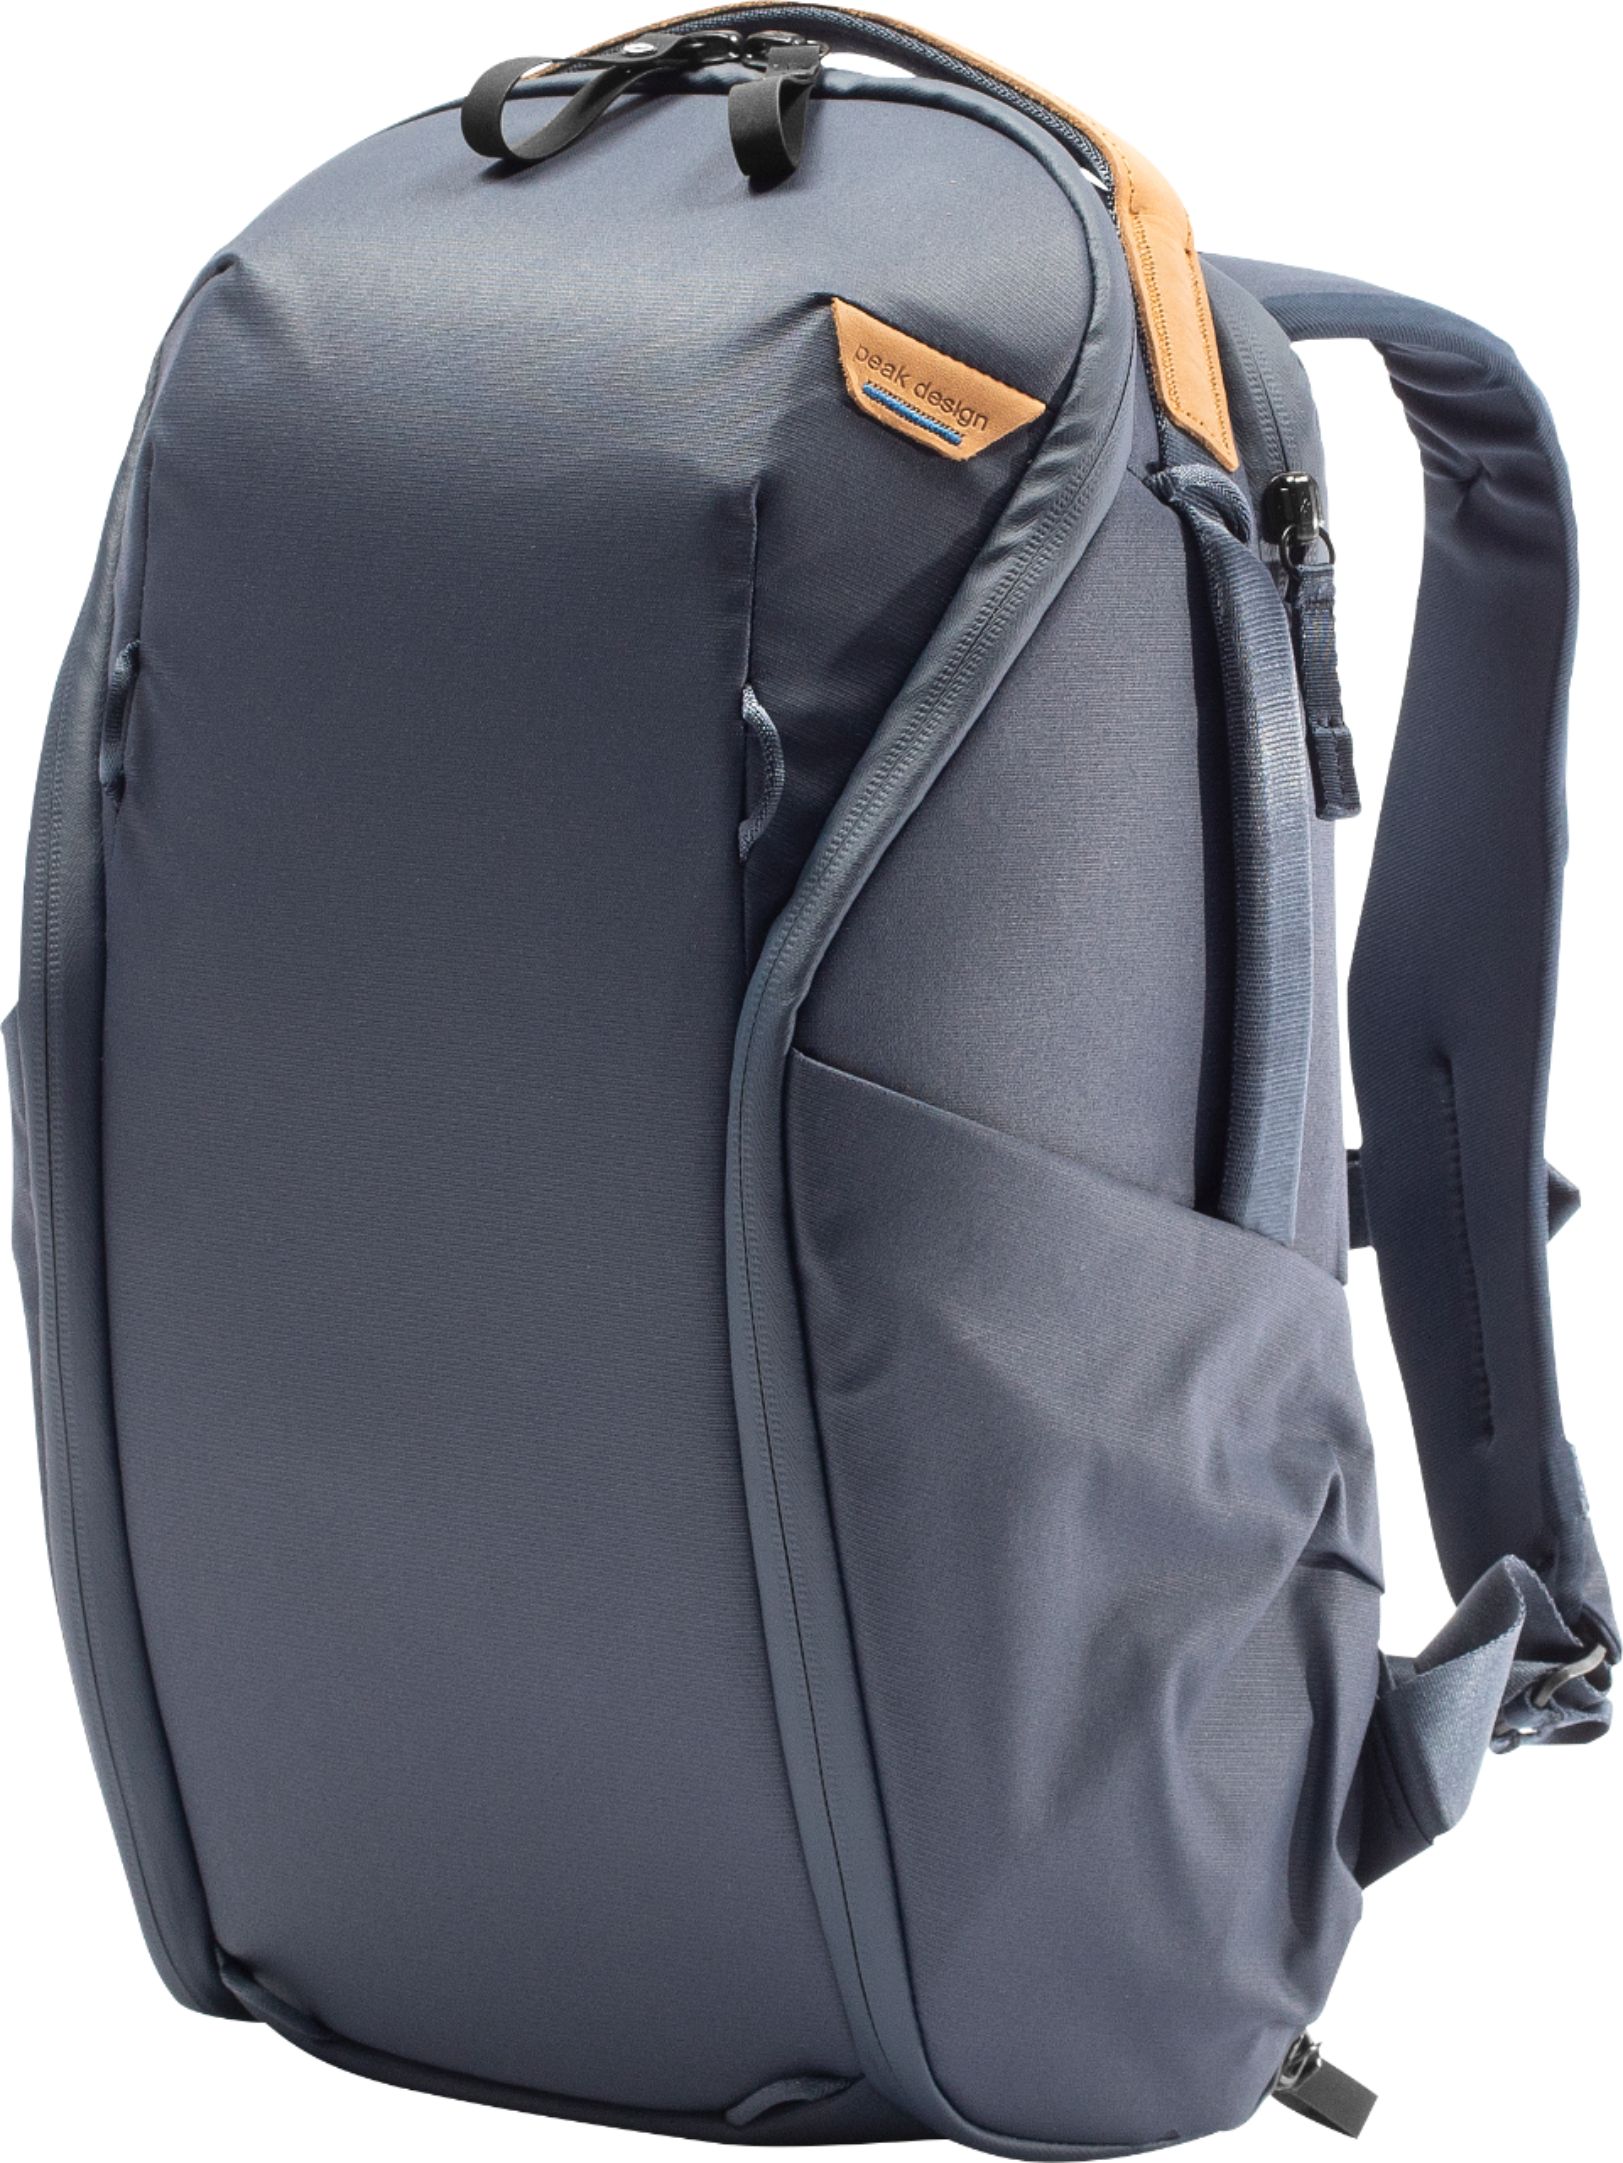 Left View: Peak Design - Everyday Backpack 15L Zip - Midnight